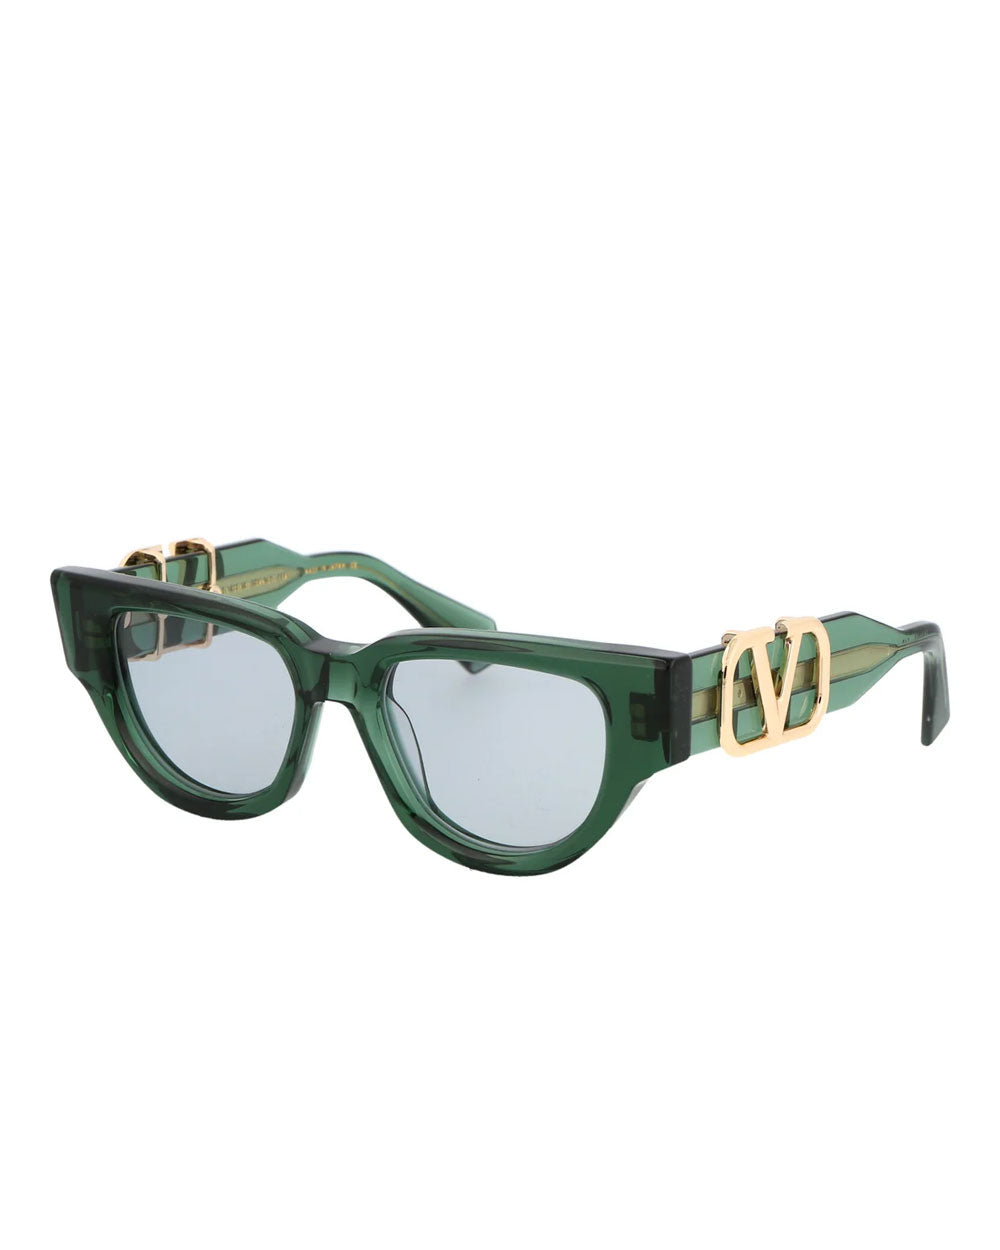 V-Due Sunglasses in Green